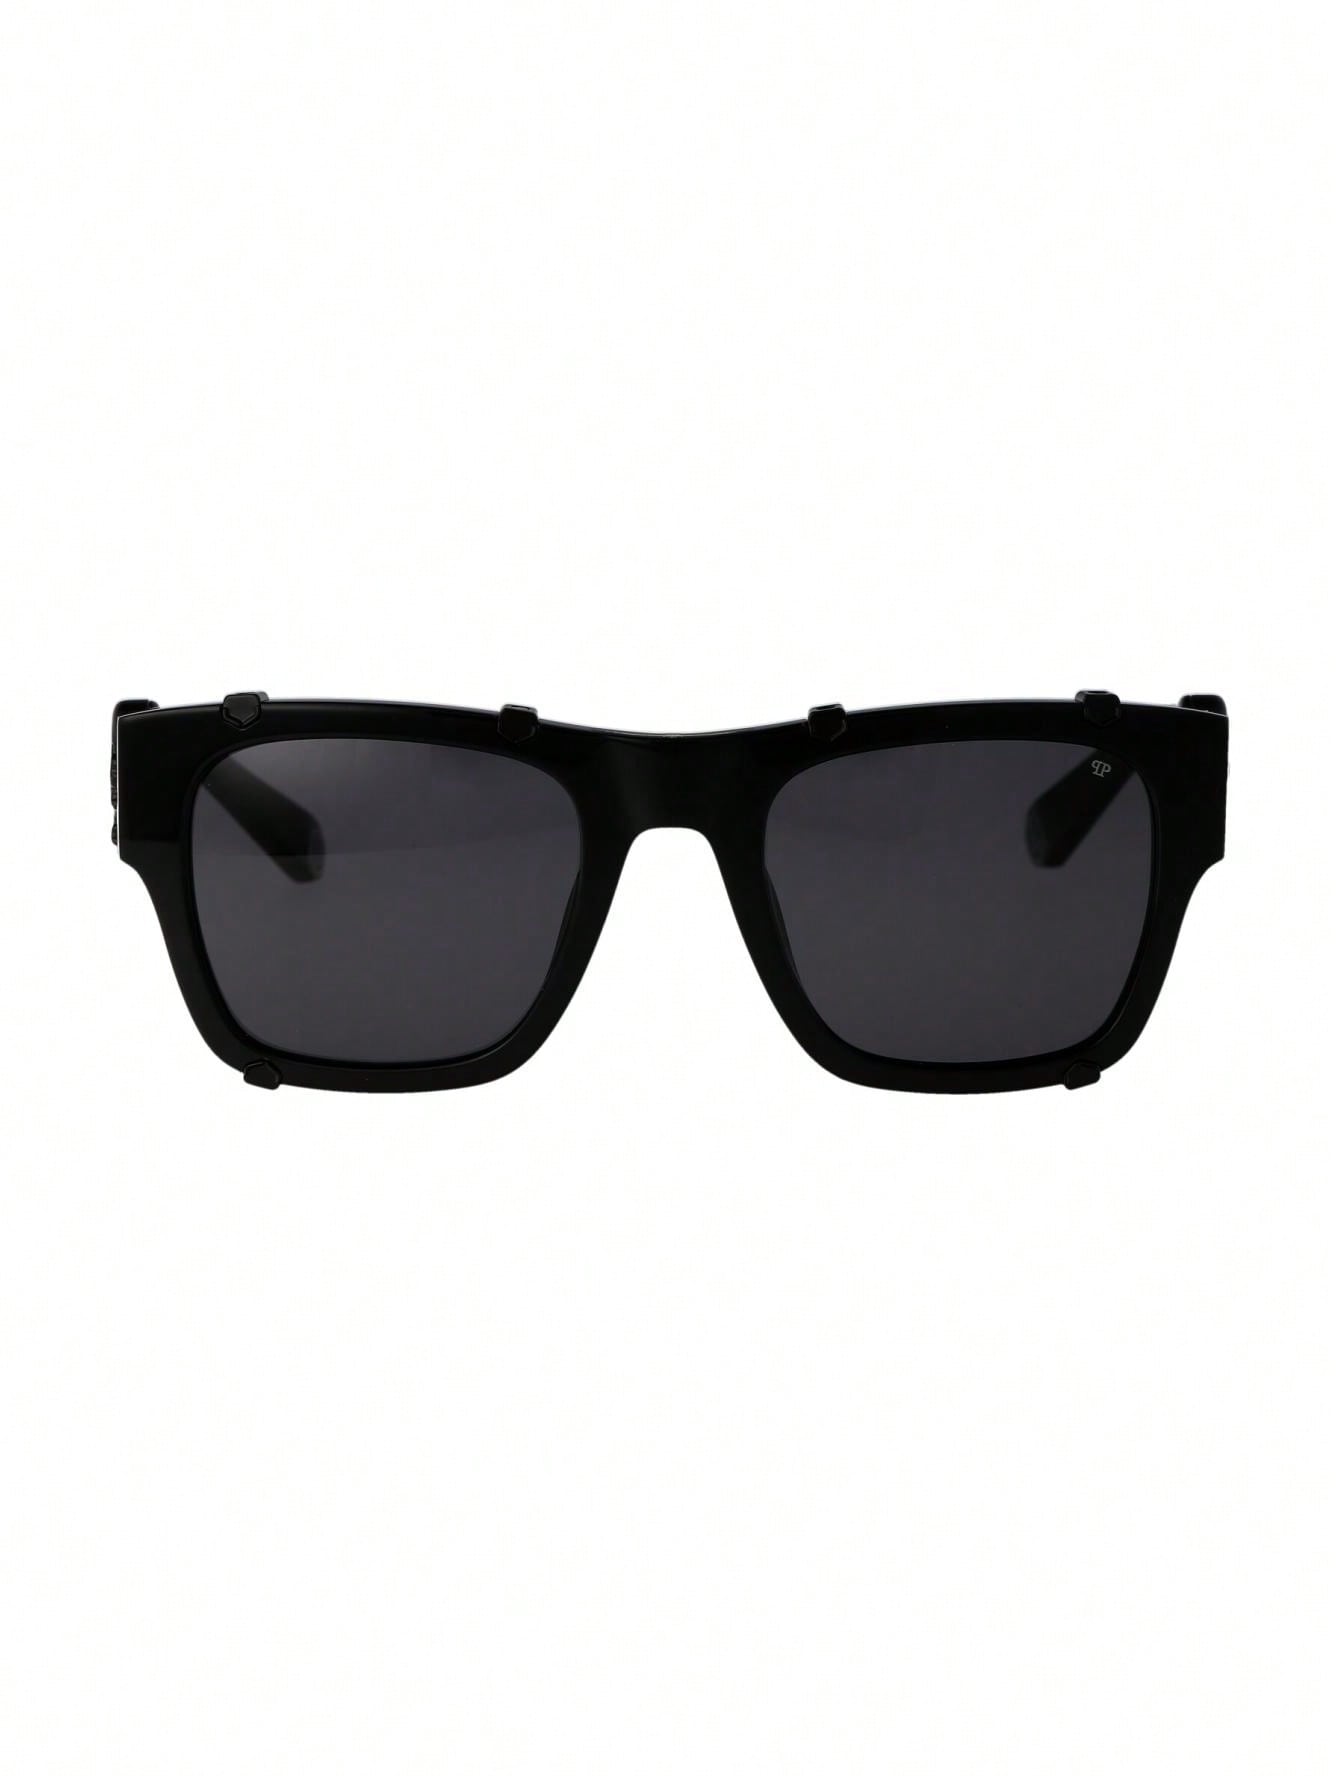 Мужские солнцезащитные очки Philipp Plein DECOR SPP042V700V, многоцветный солнцезащитные очки philipp plein 025s 700